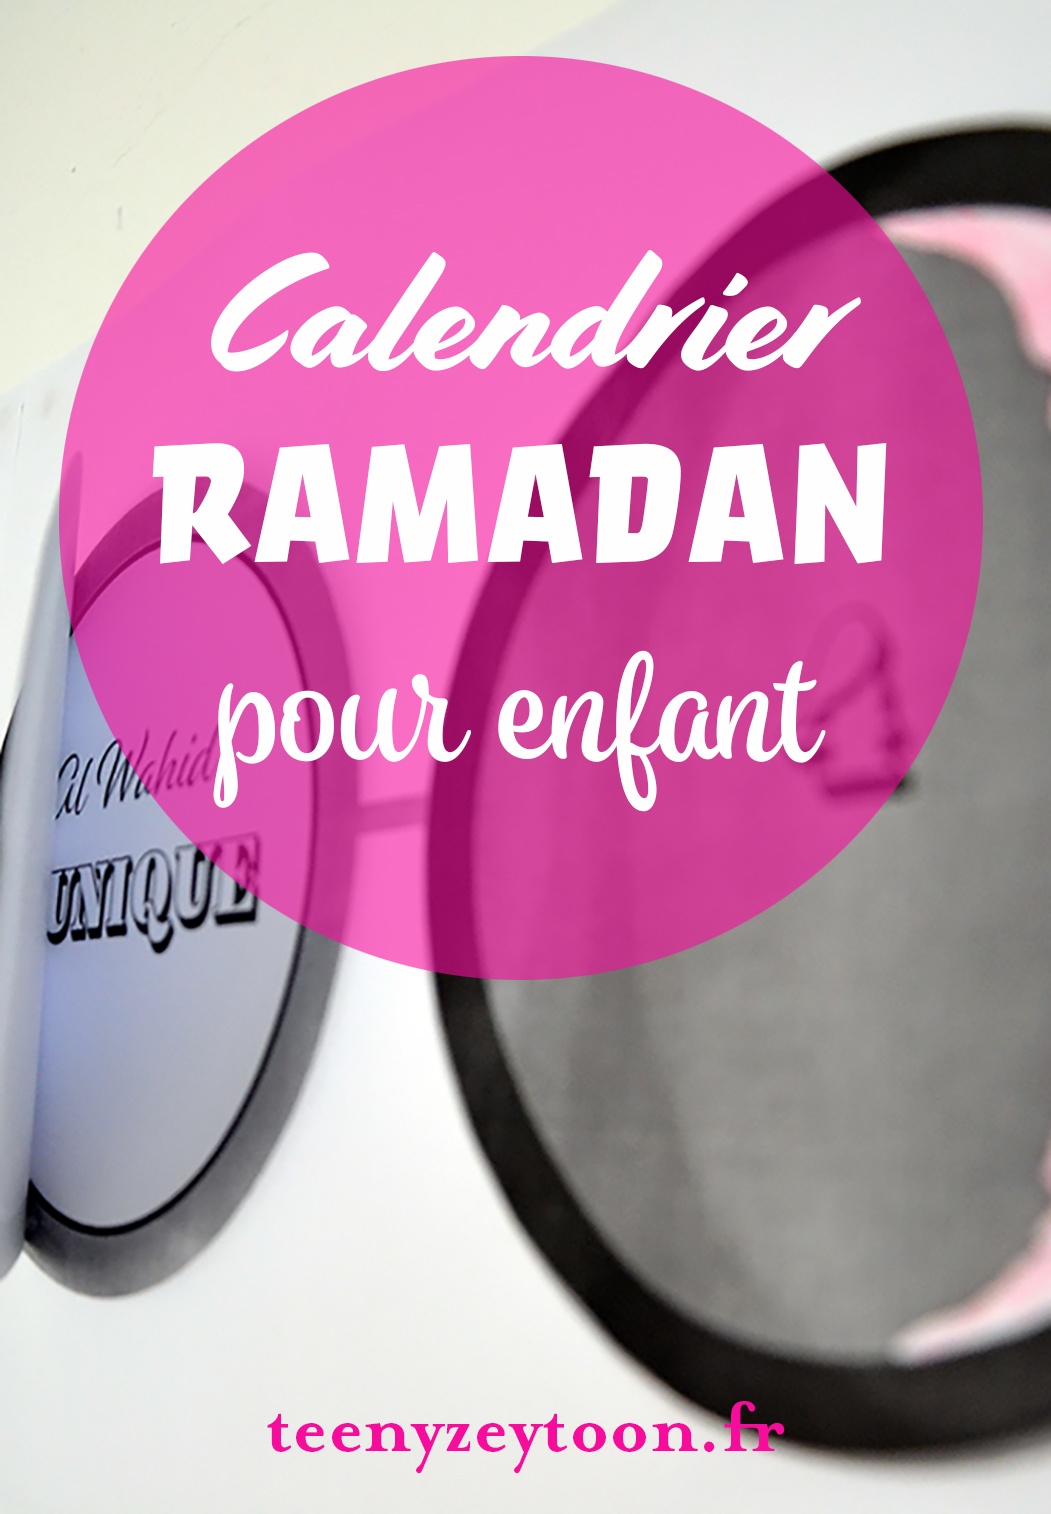 Calendrier Ramadan PDF Activité Ramadan Pour Enfants Calendrier De L'avent  Ramadan Enfants Musulmans Activité D'apprentissage Ramadan 